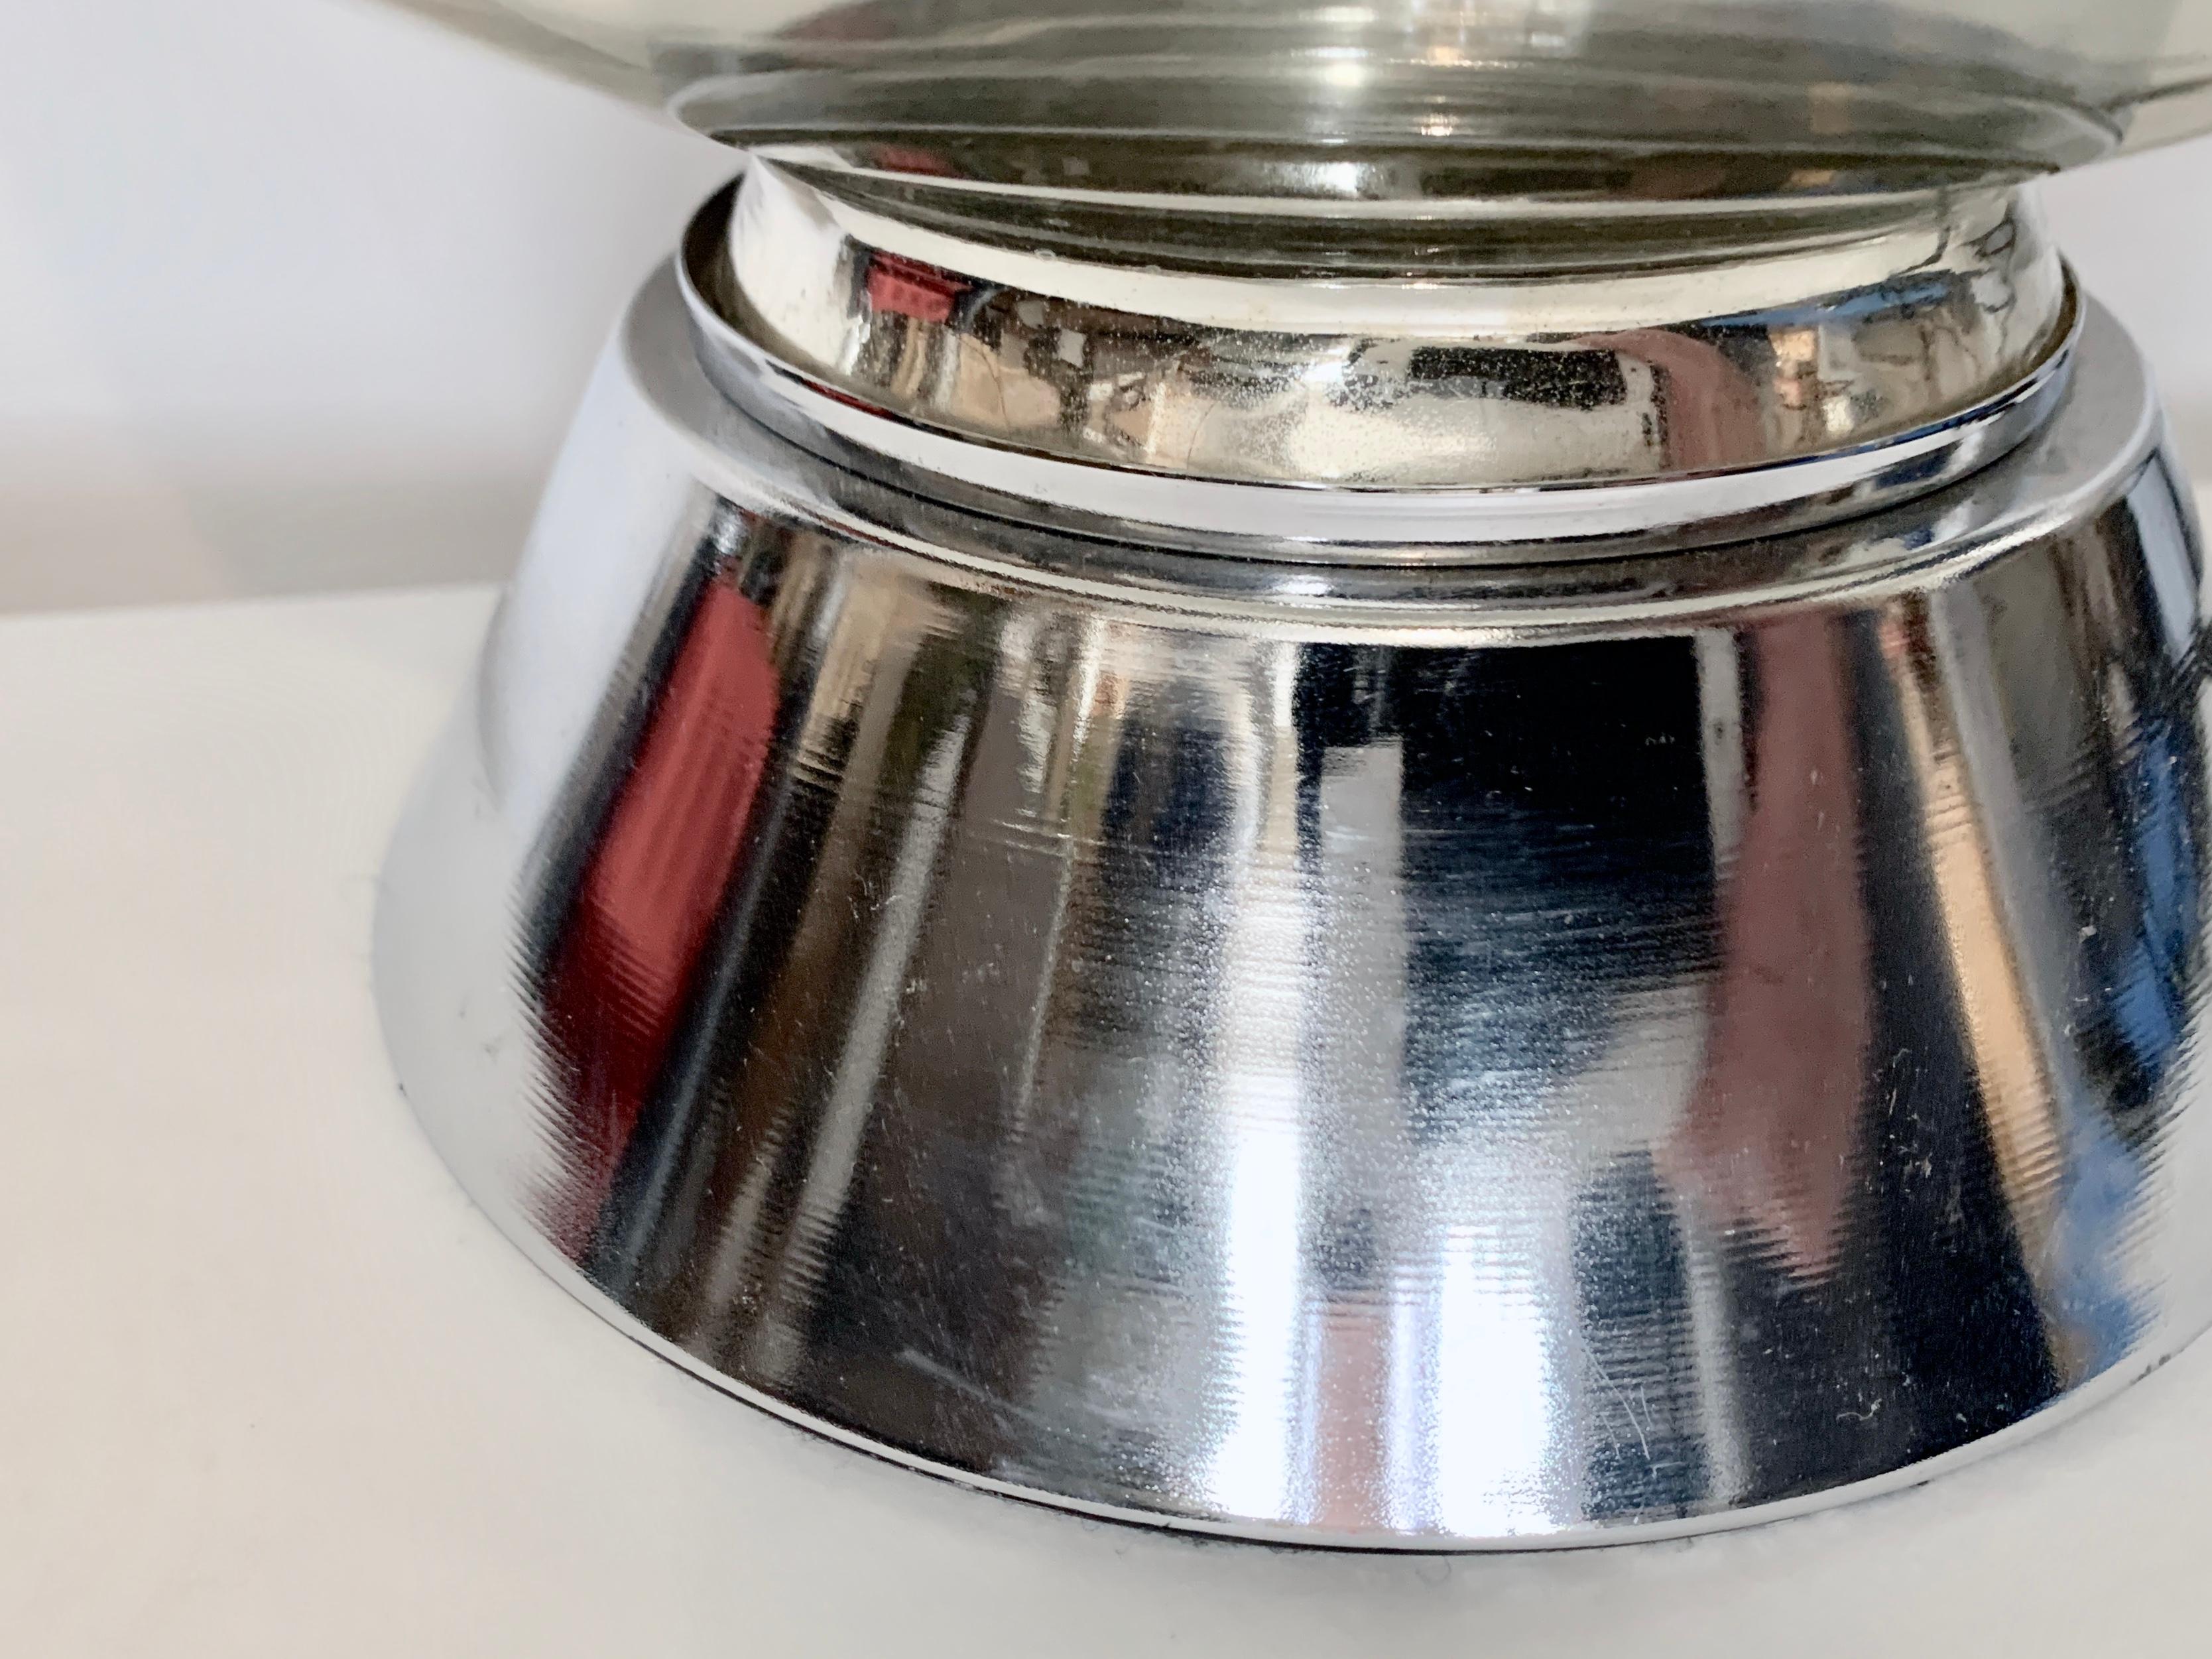 Chapman Co. Mercury Glass Ball Table Lamp, 1960's For Sale 3